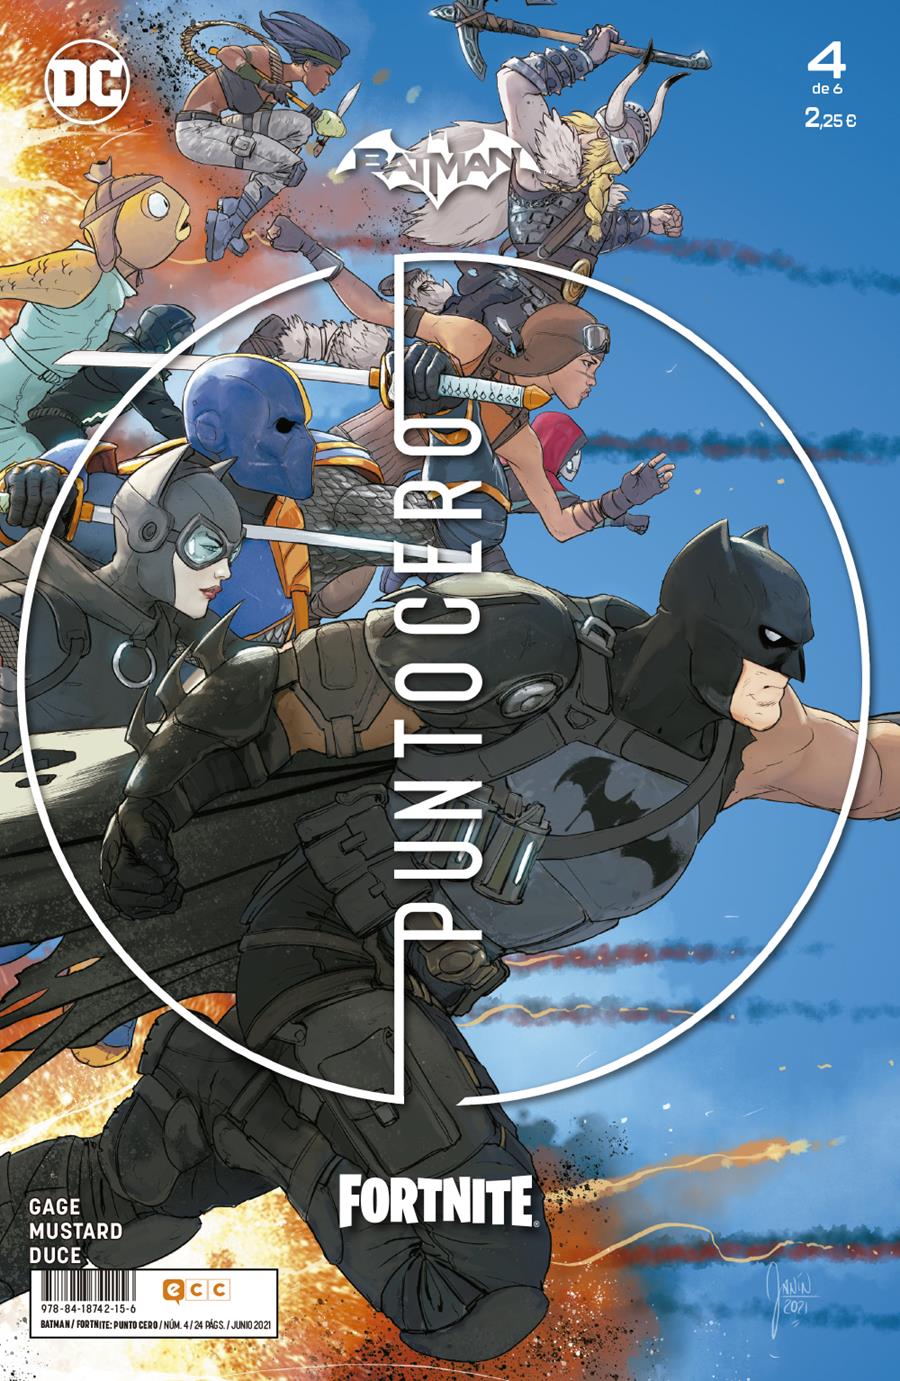 Batman/Fortnite: Punto cero núm. 4 de 6 | N0421-ECC93 | Christos N. Gage, Donald Mustard, Reilly Brown | Terra de Còmic - Tu tienda de cómics online especializada en cómics, manga y merchandising